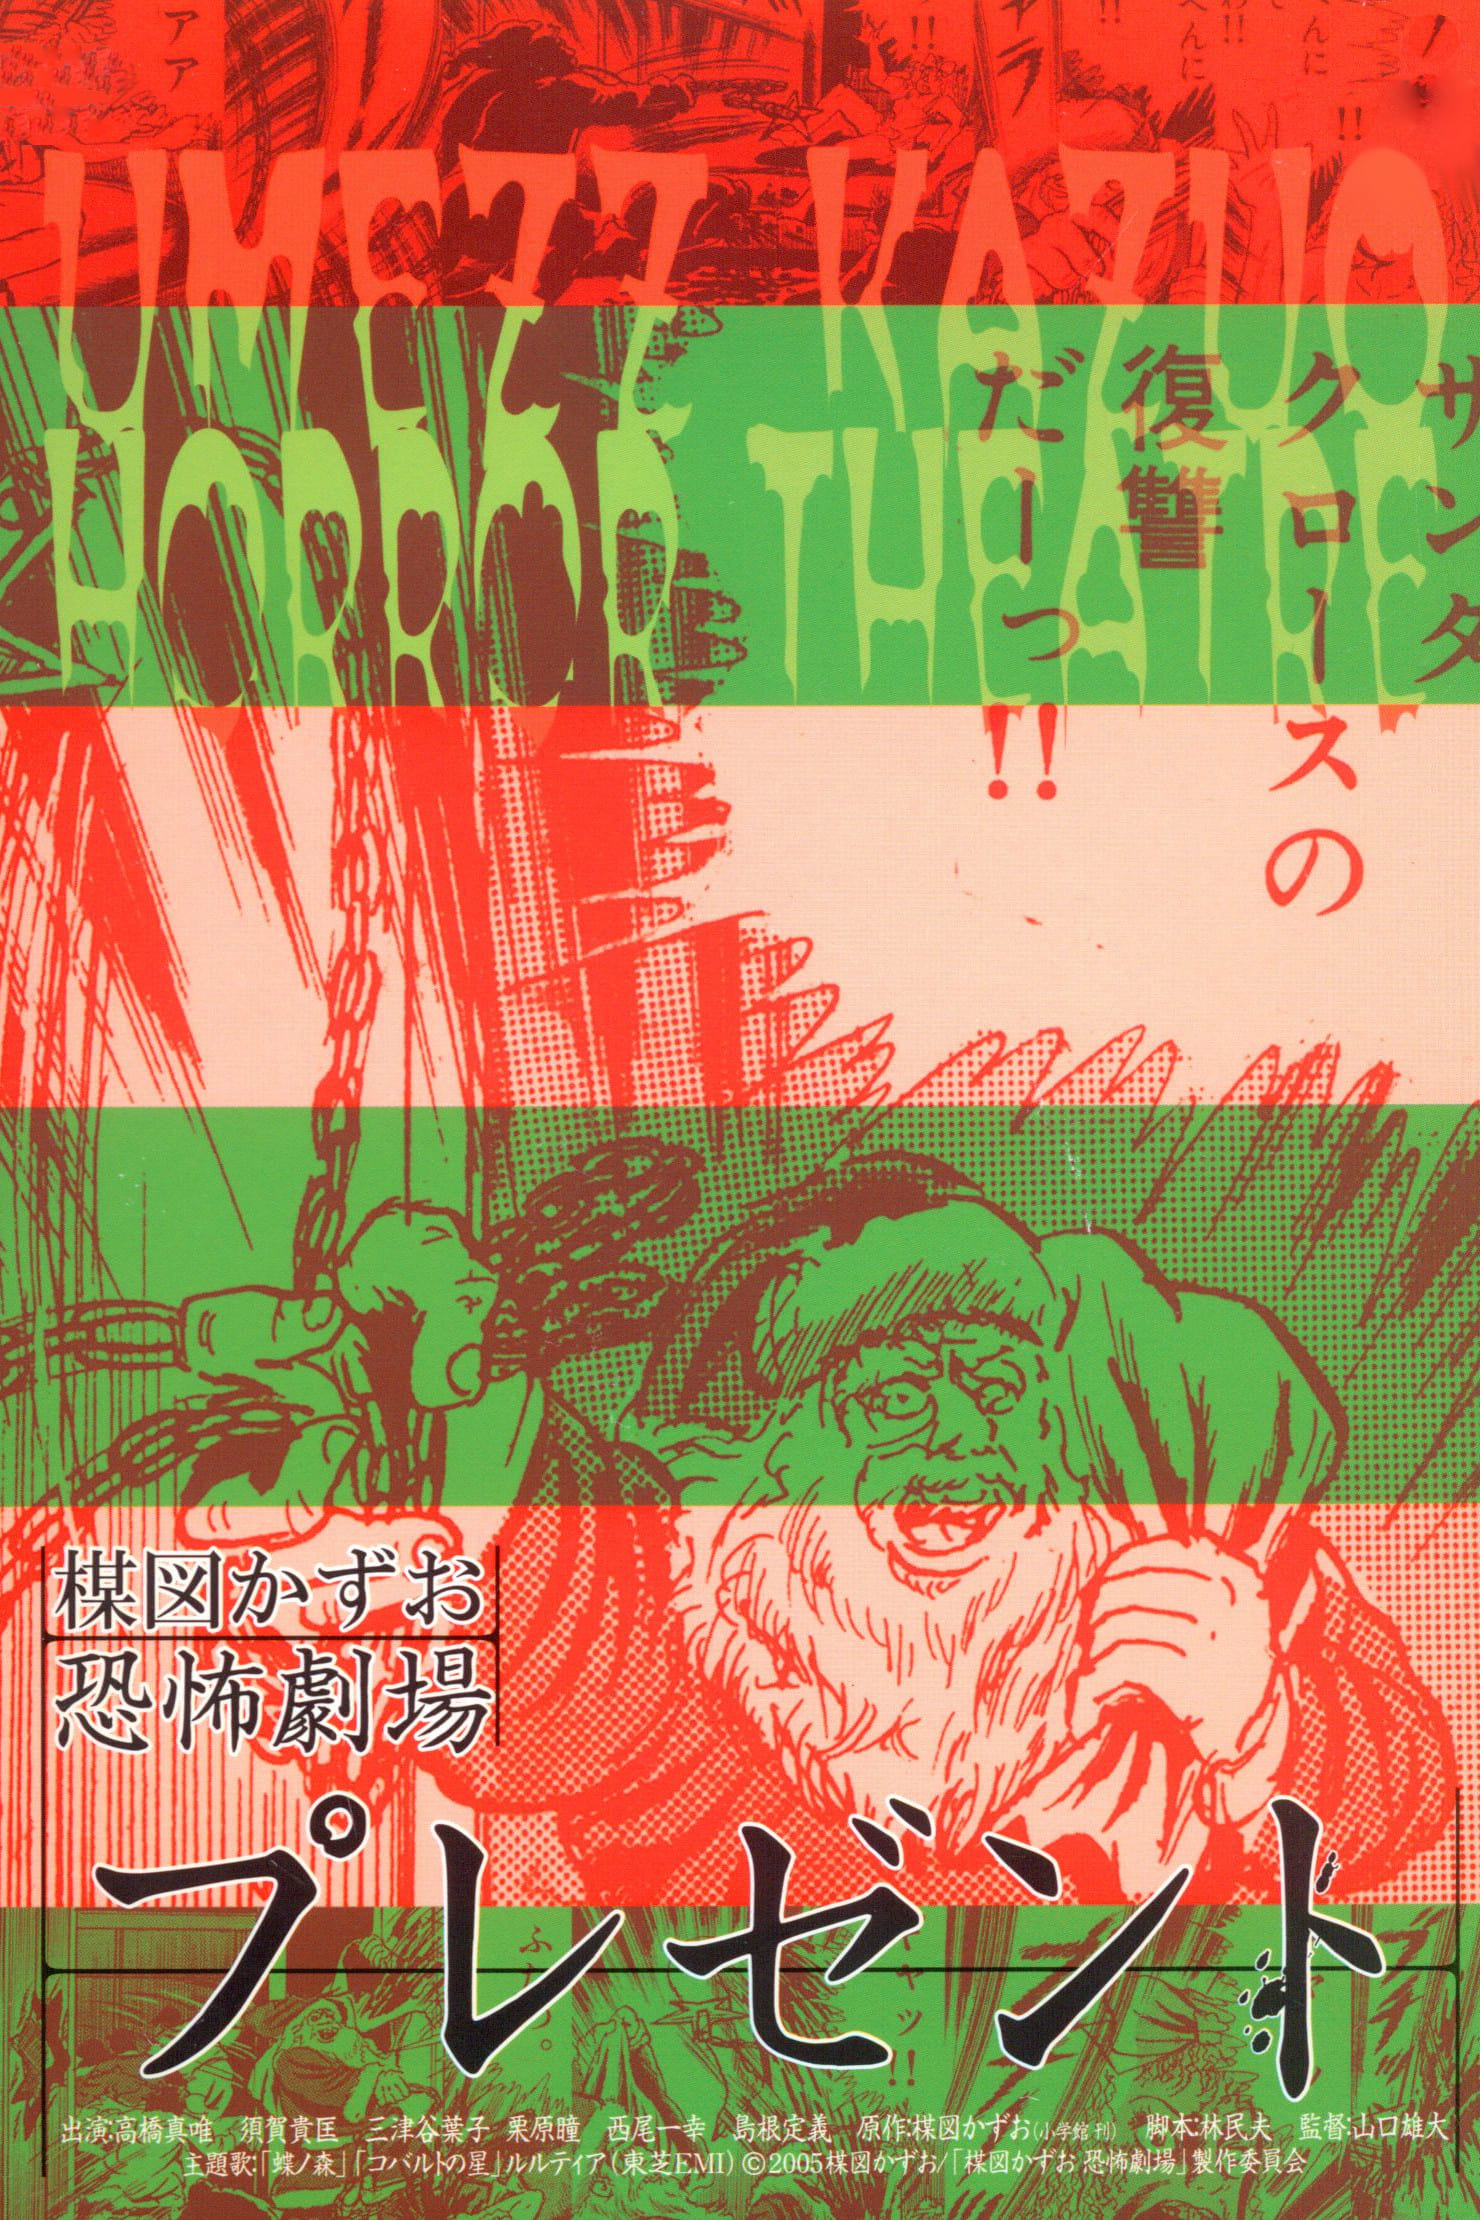 Kazuo Umezz's Horror Theater: Present